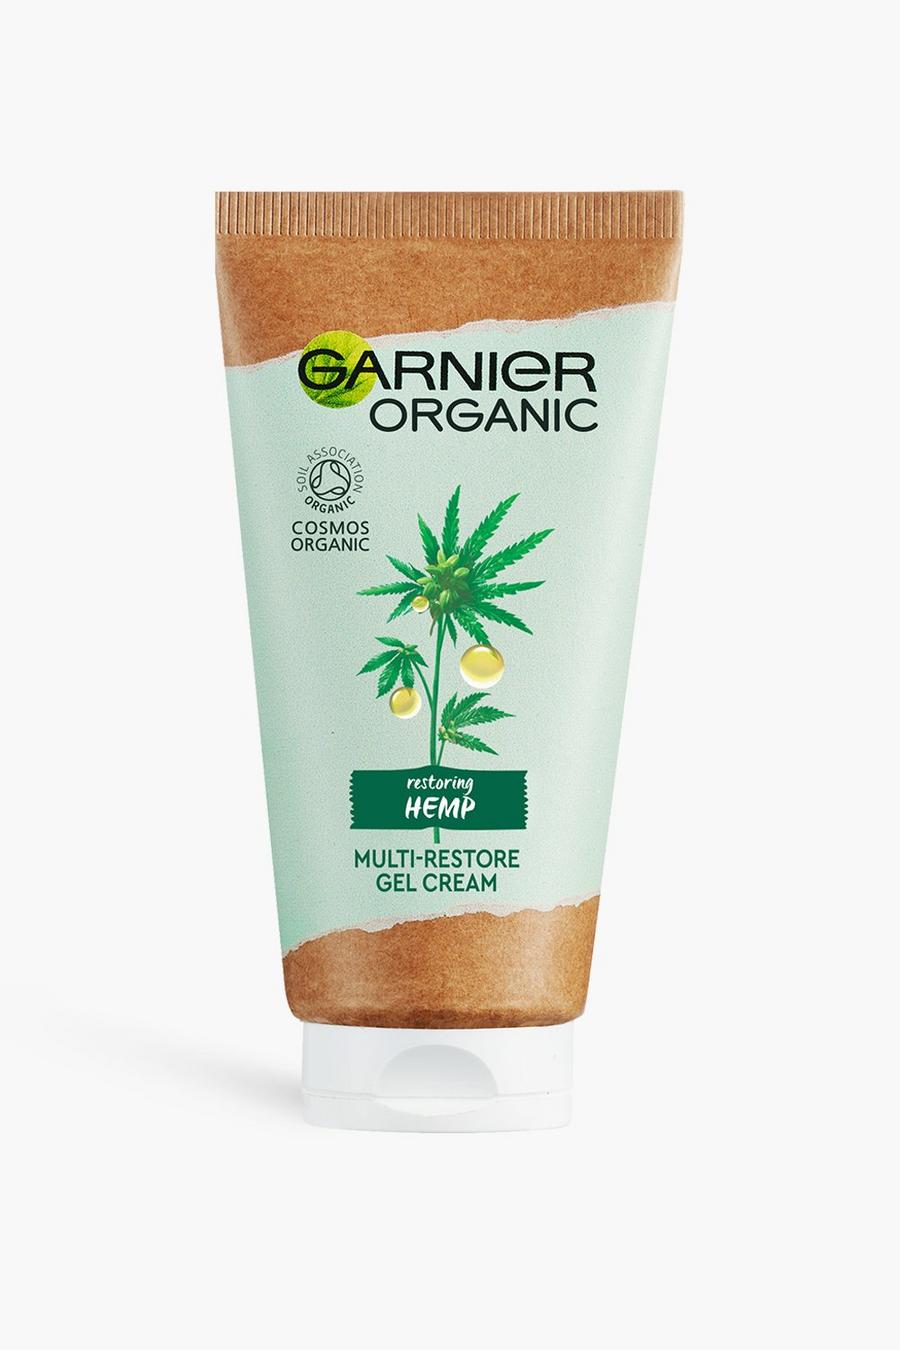 Green gerde Garnier Organic Hemp Multi-Restore Gel Cream 50ml